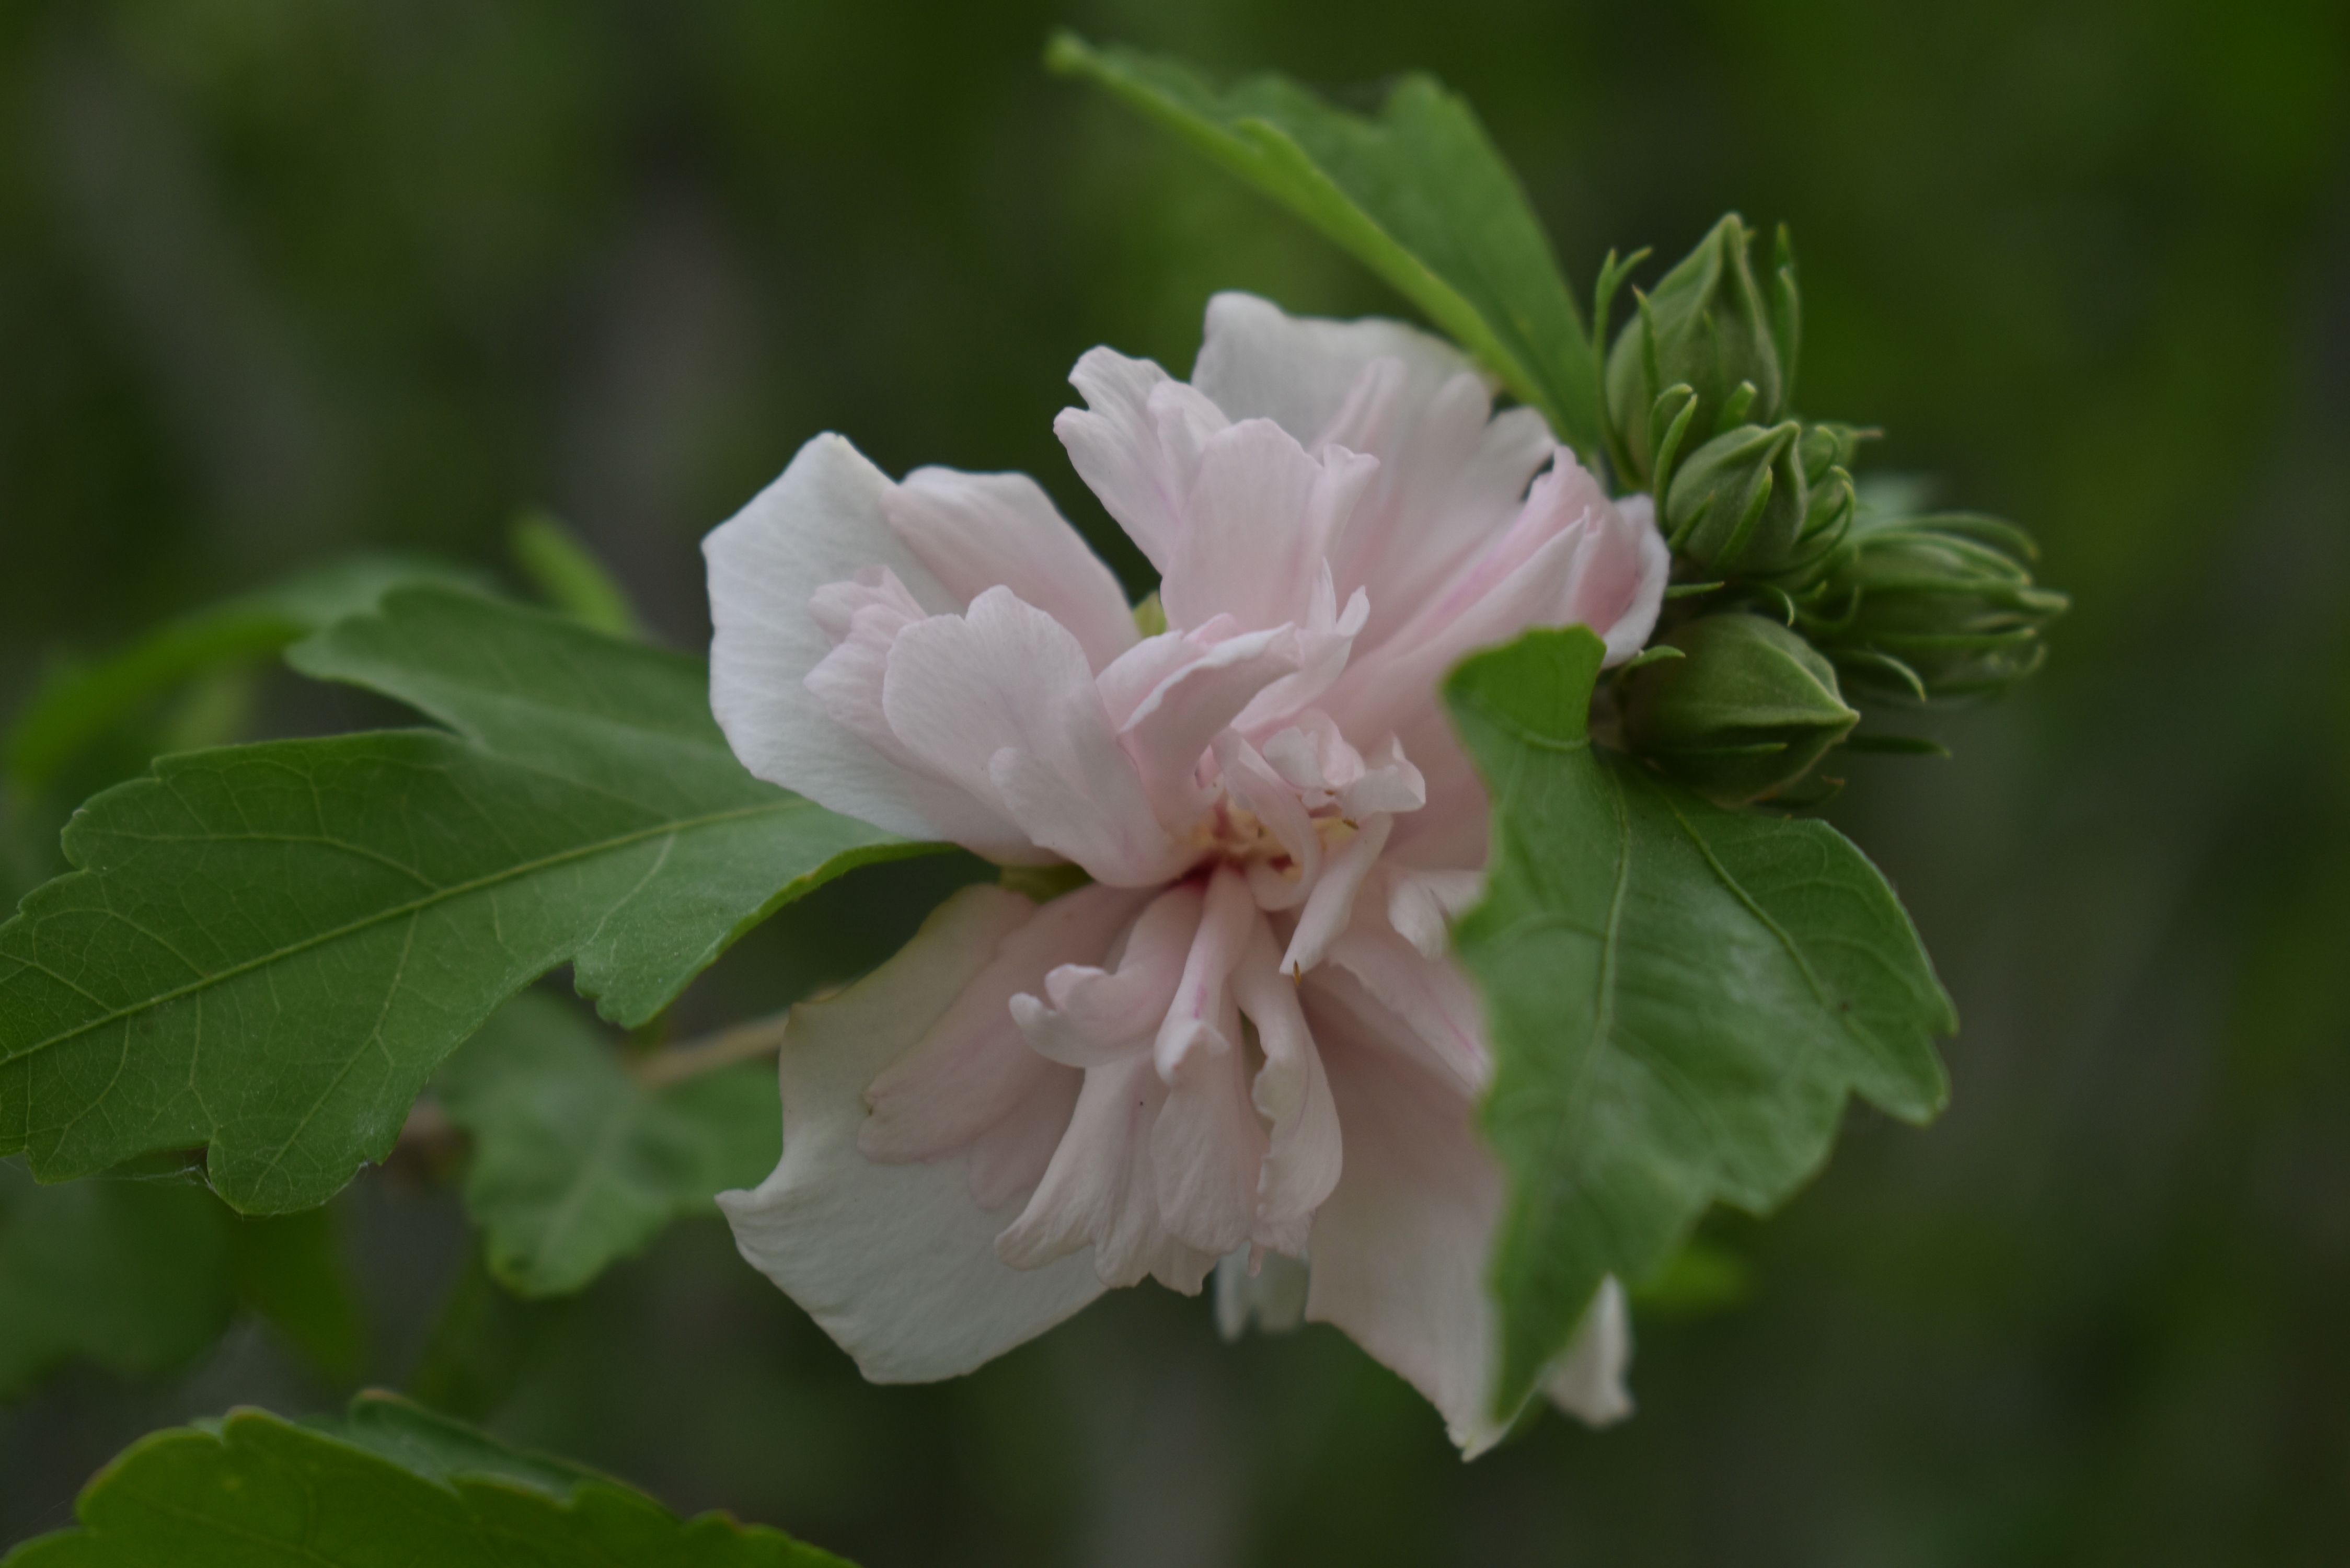 https://conservationgardenpark.org/file/3bb450e2-c5ef-4da4-b133-a63d4e0fde43/Hibiscus-syriacus-Blushing-Bride---Blushing-Bride-Rose-of-Sharon-1.jpg